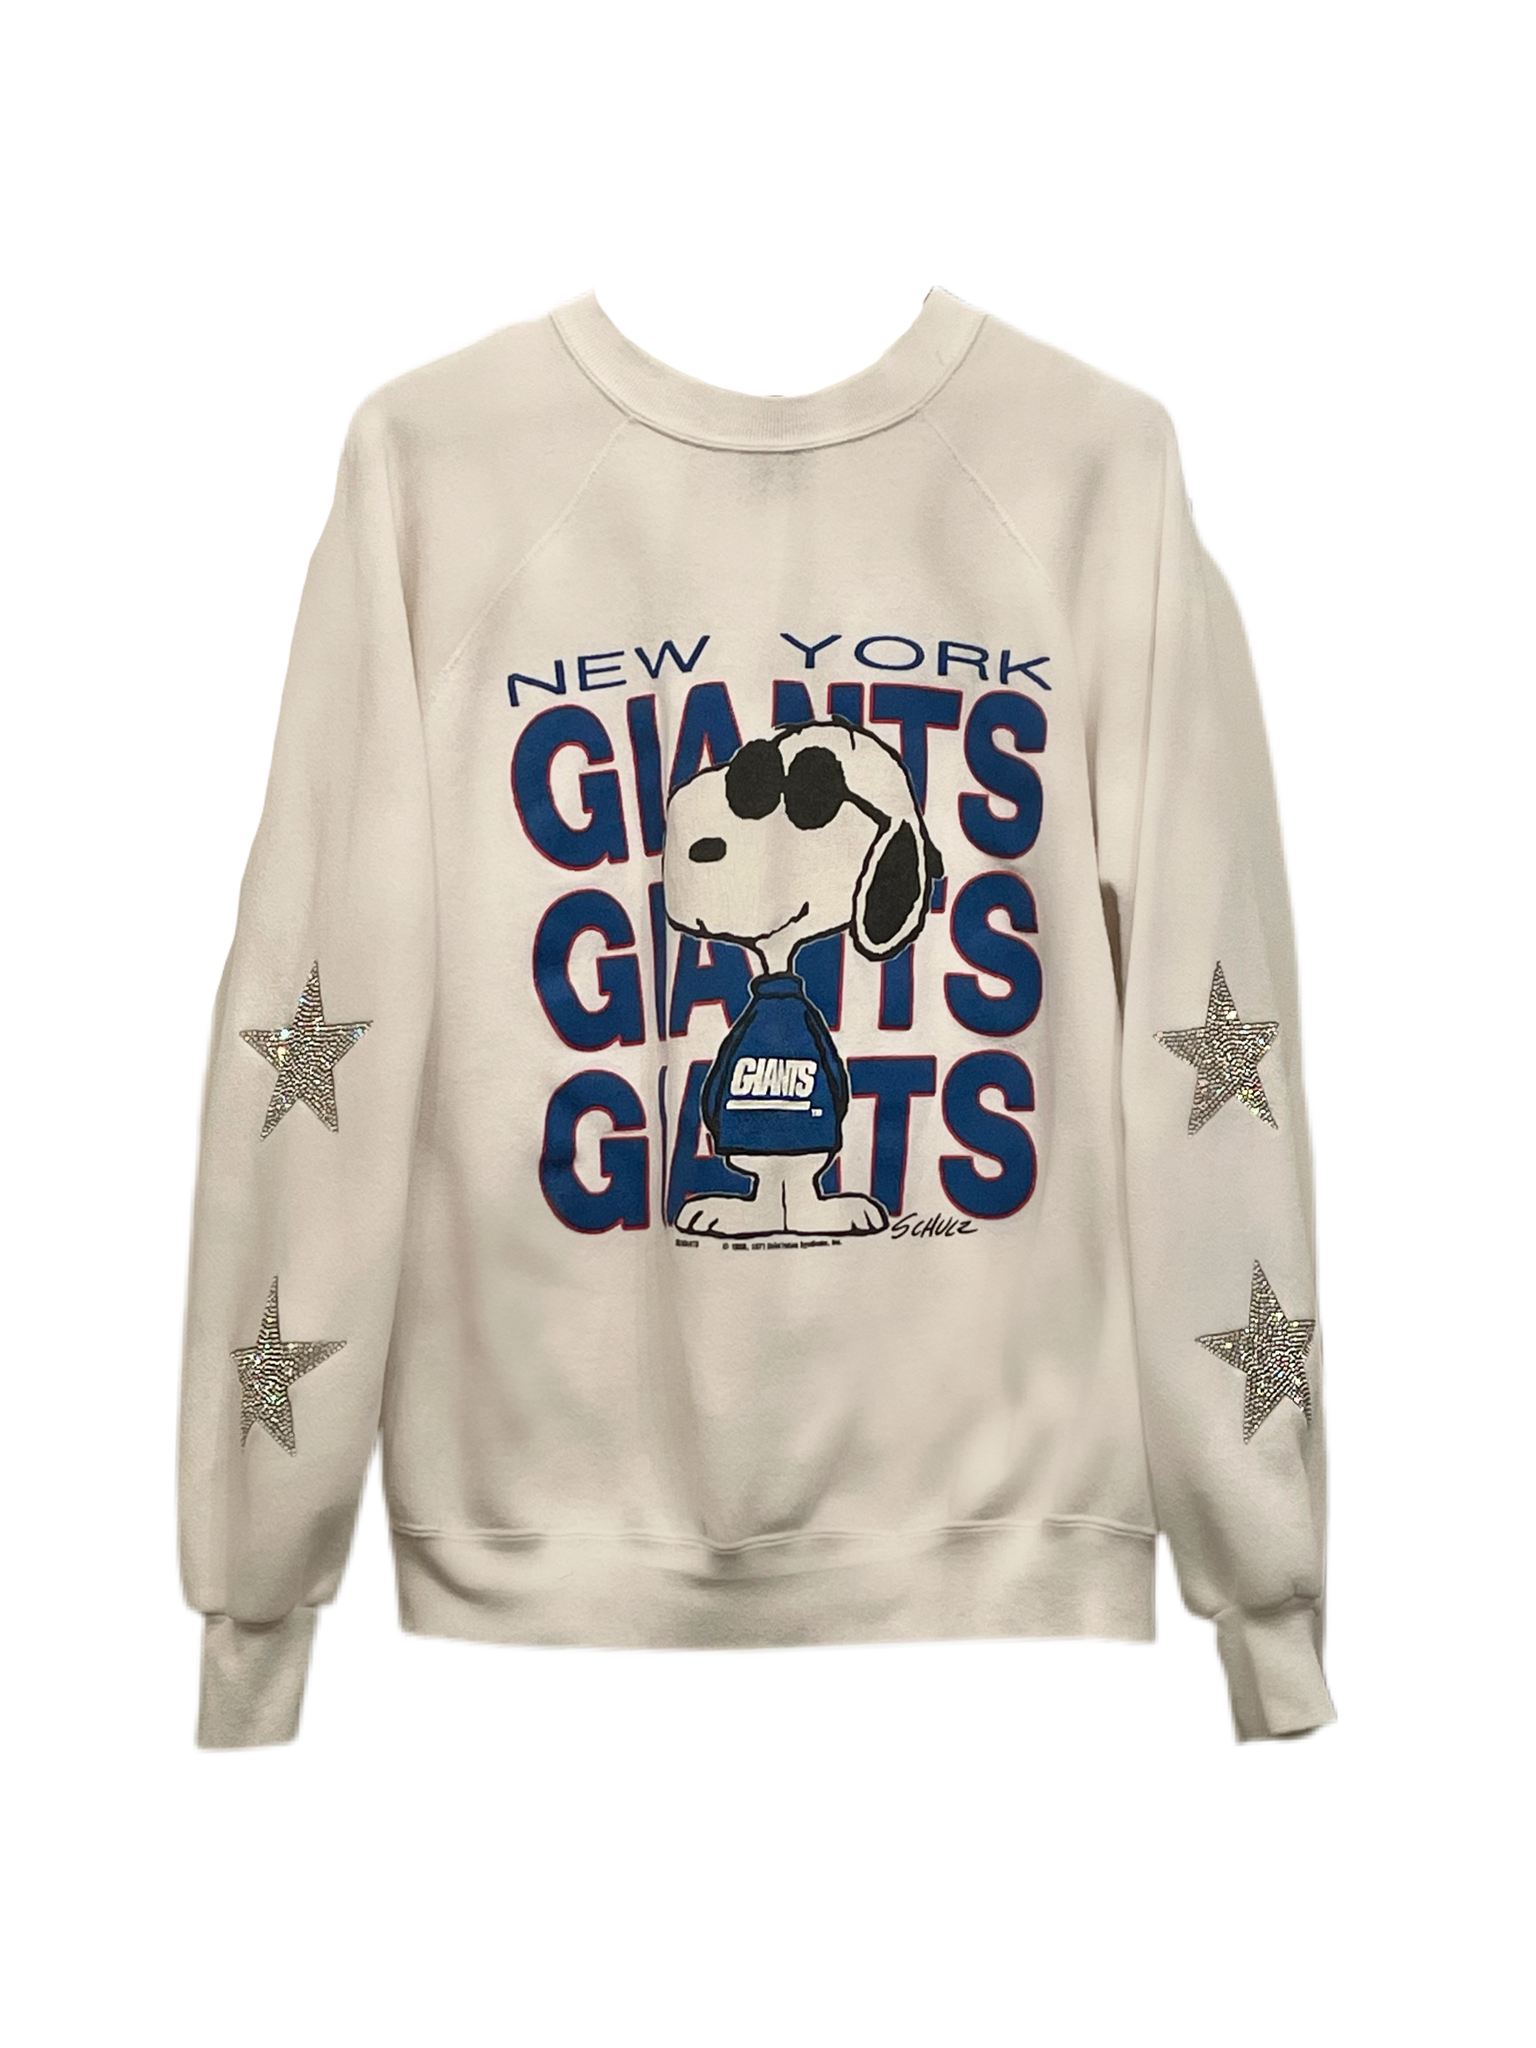 ShopCrystalRags Washington Capitals, NHL One of A Kind Vintage Sweatshirt with Crystal Stars Design